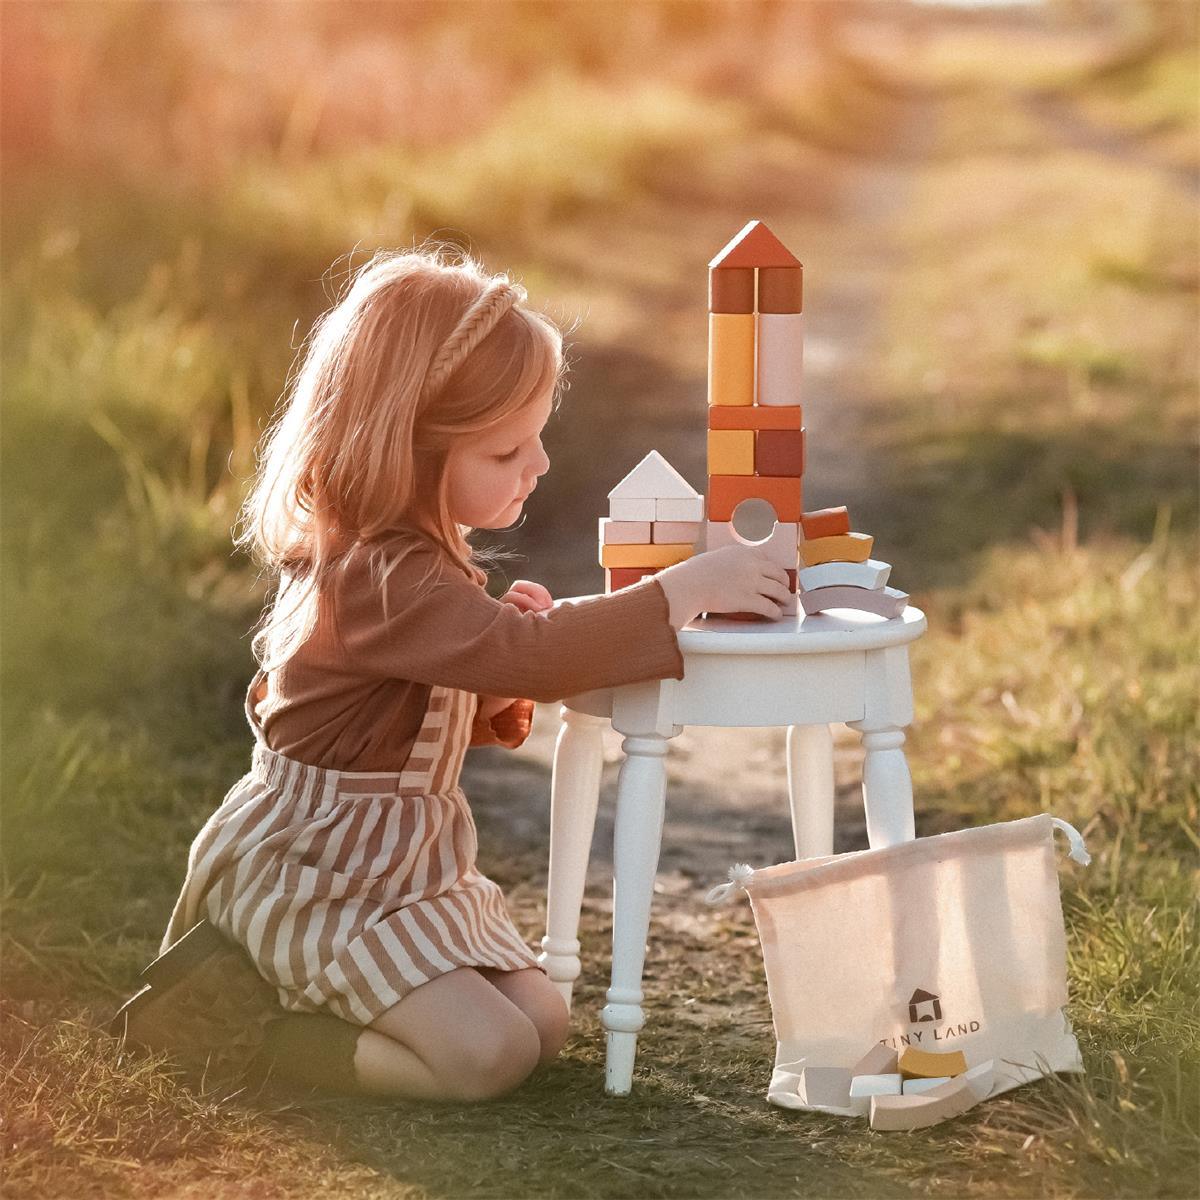 Tiny Land wooden toys Tiny Land® Boho Mama best wooden blocks for kids